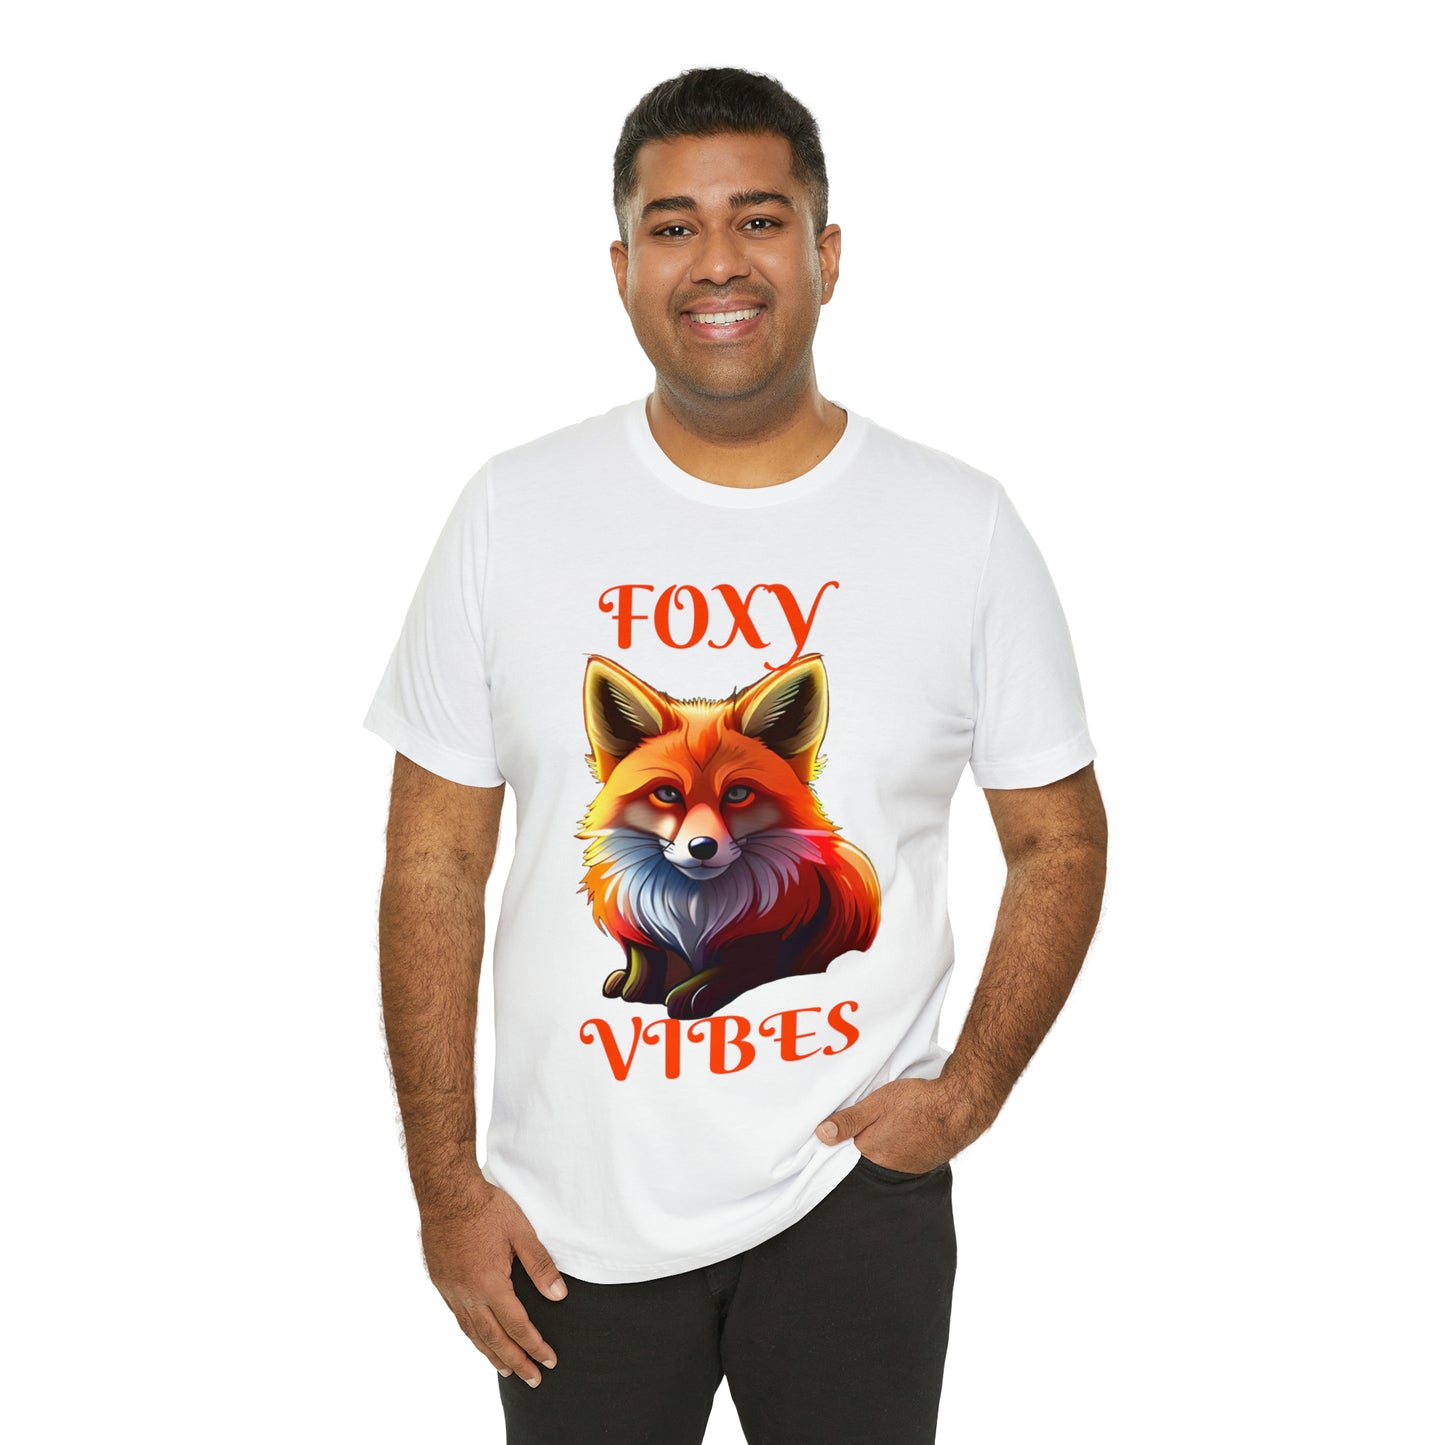 Foxy Vibes